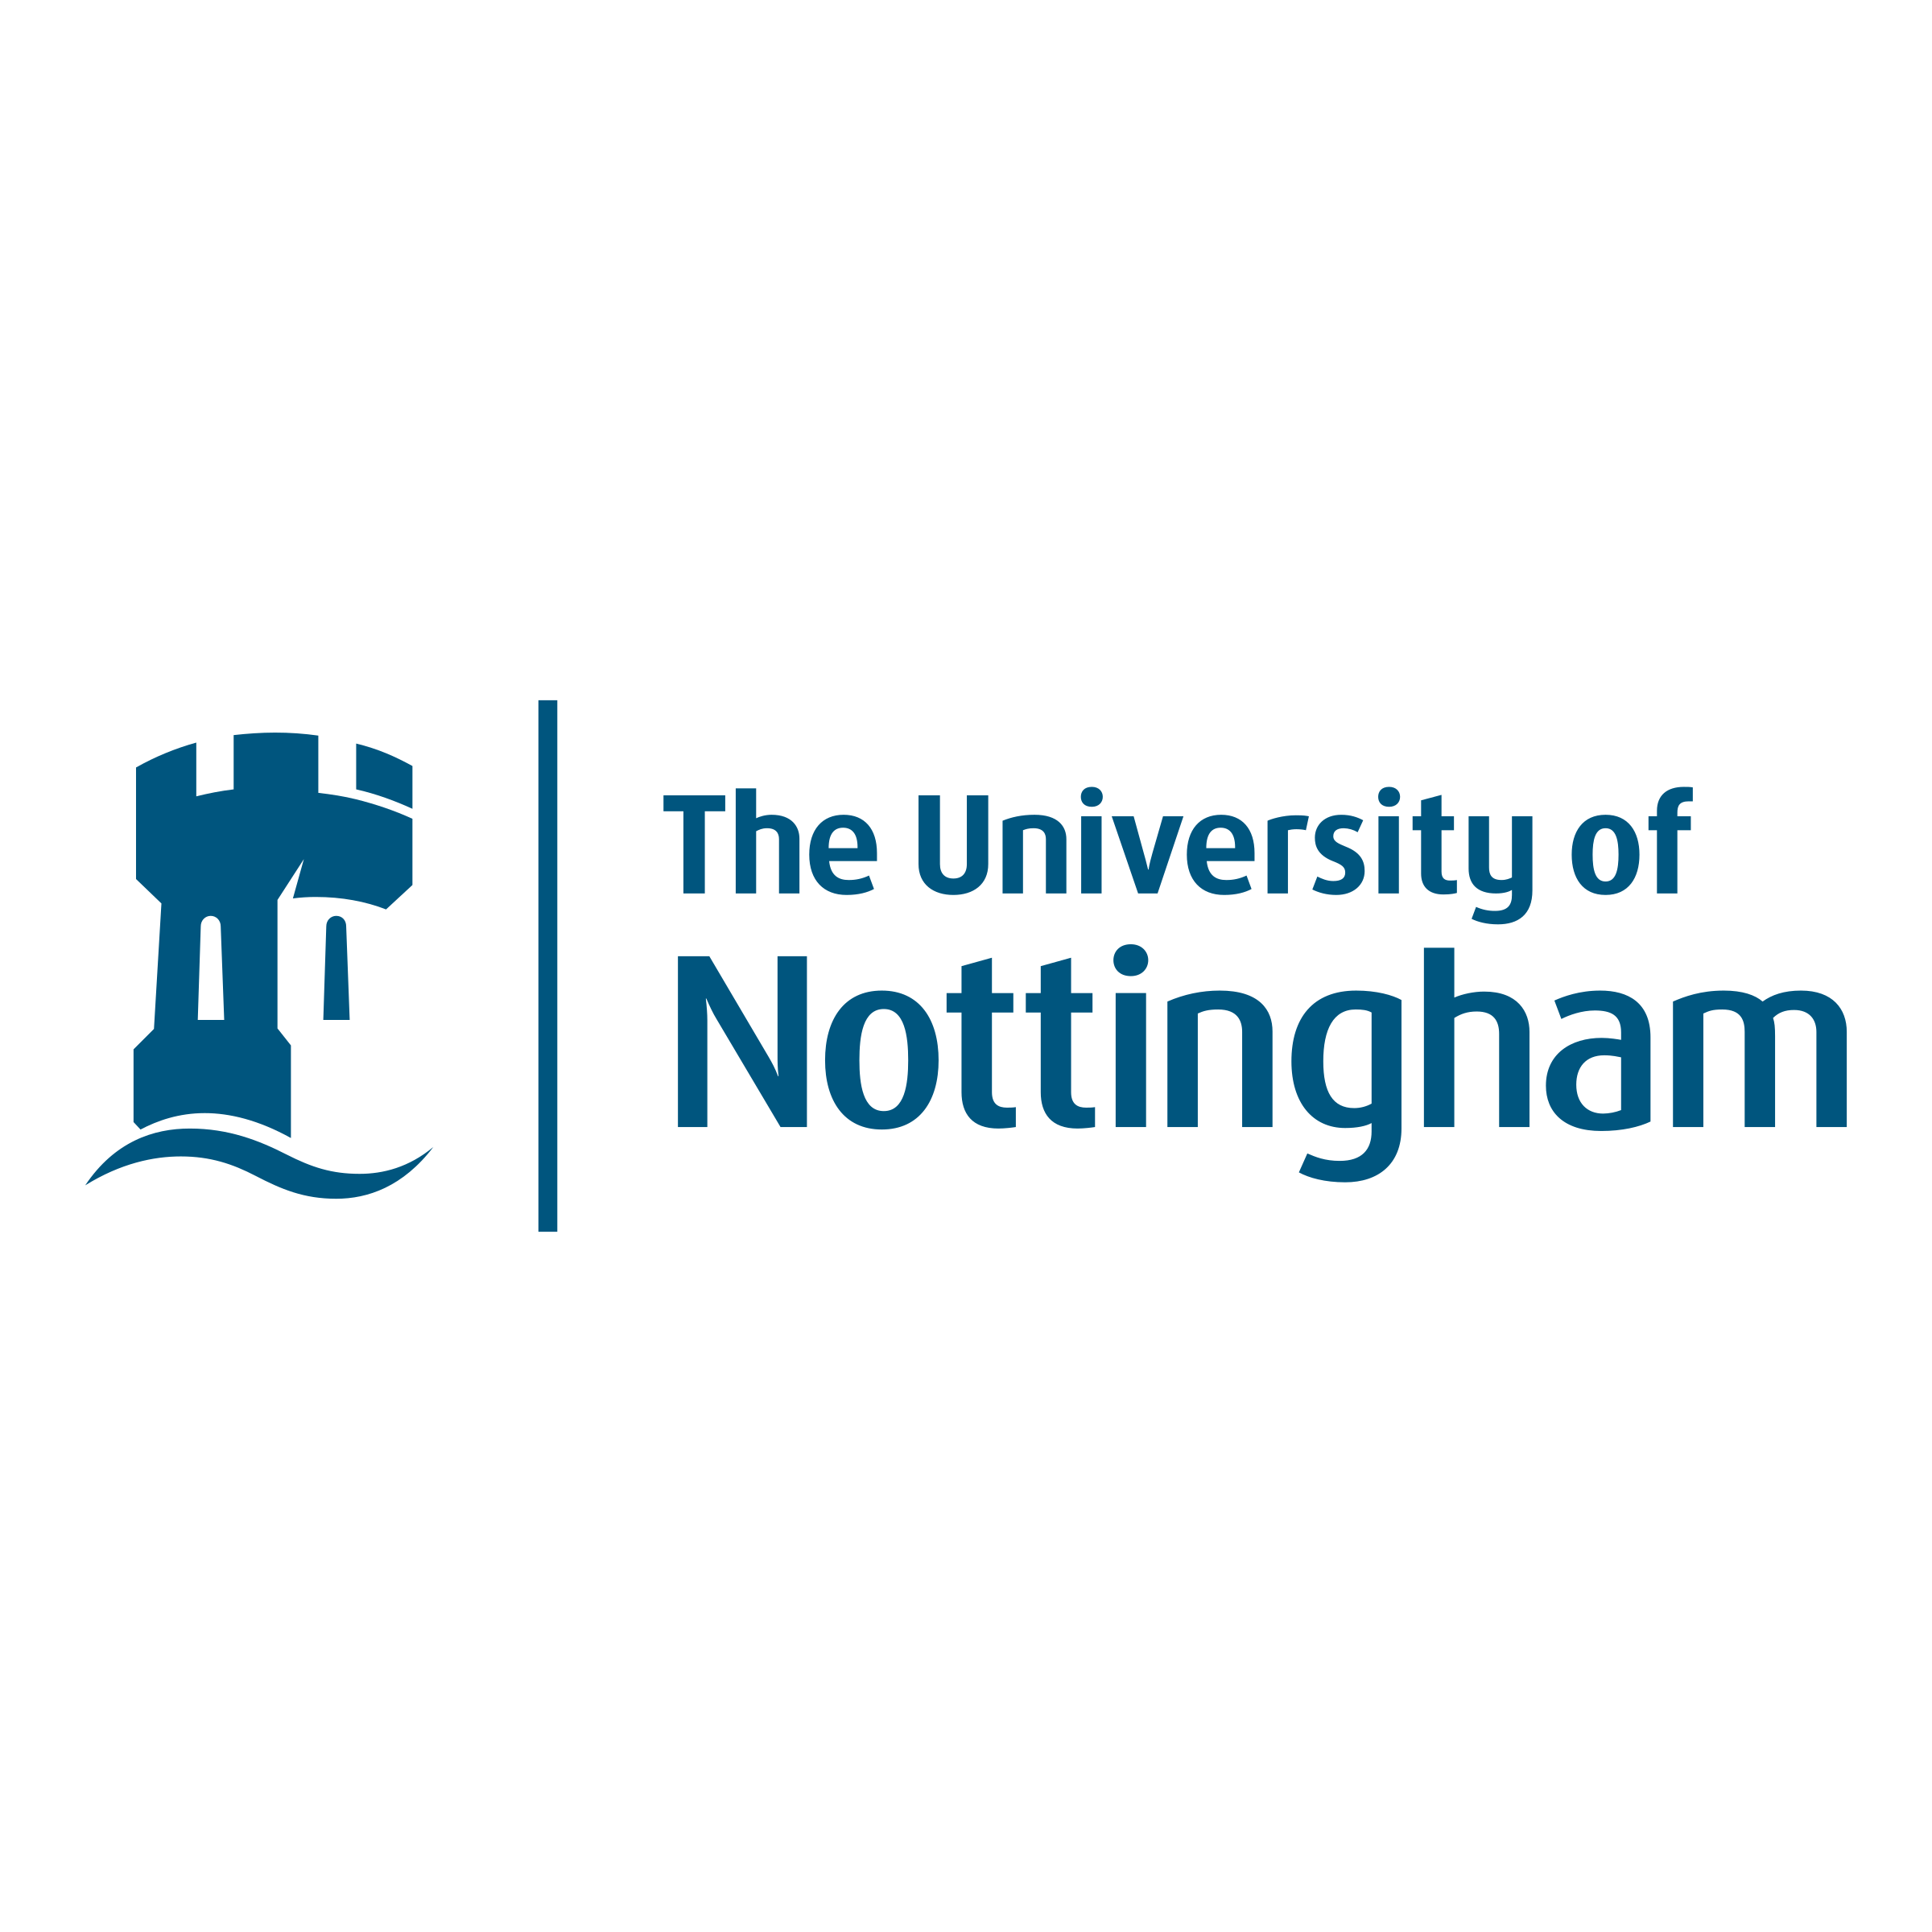 University of Nottingham Logotyp PNG Transparent & SVG Vector ...